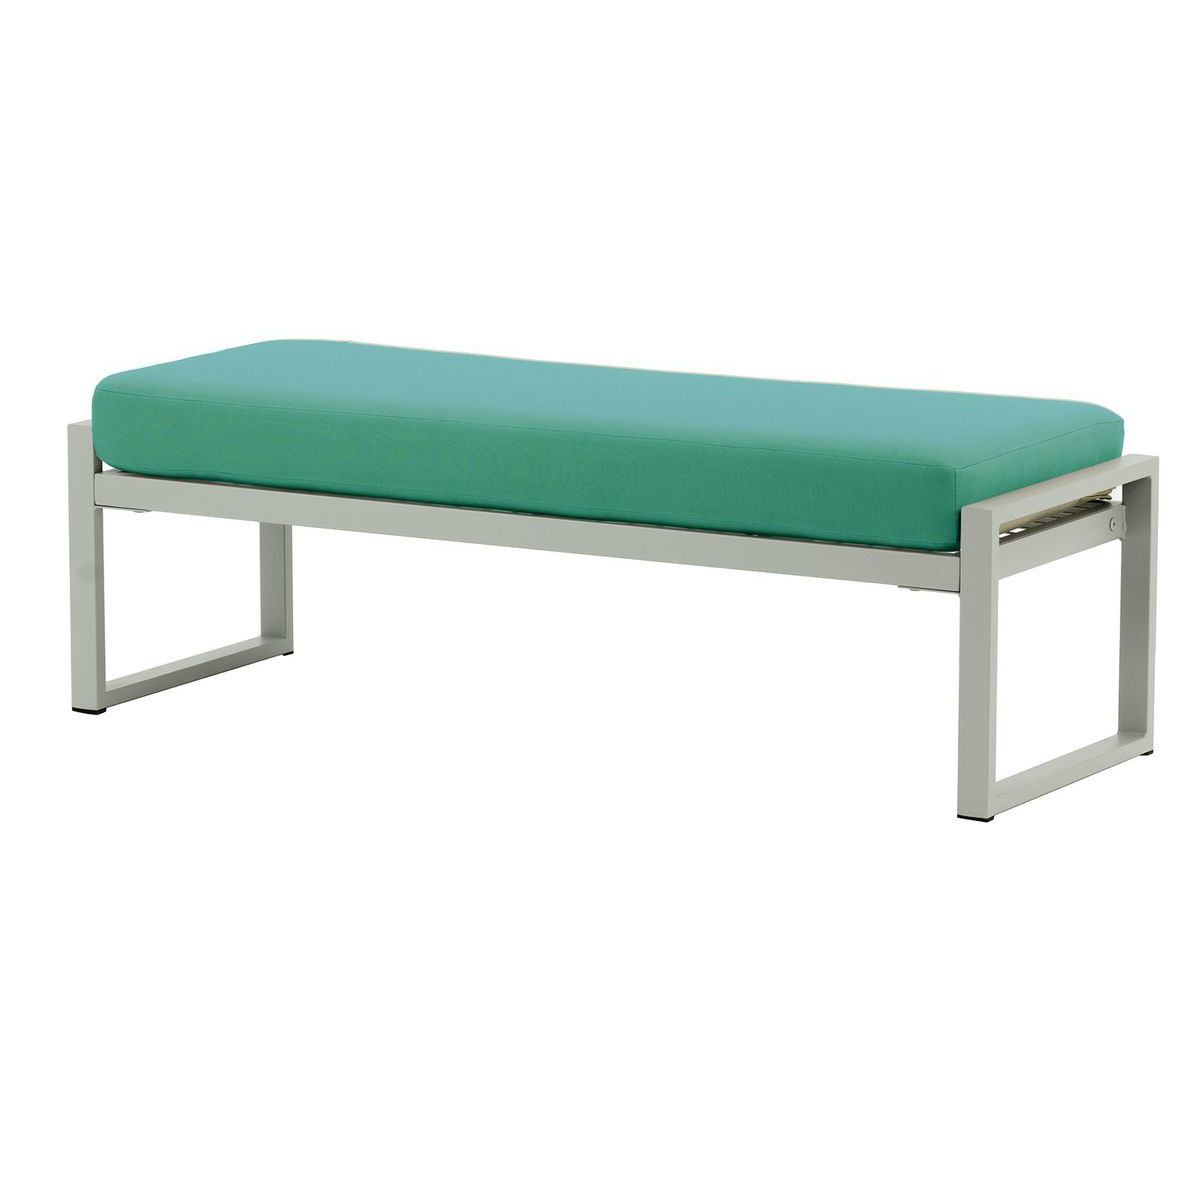 Sunset Garden Bench, turquoise, Leg colour: grey steel - image 1